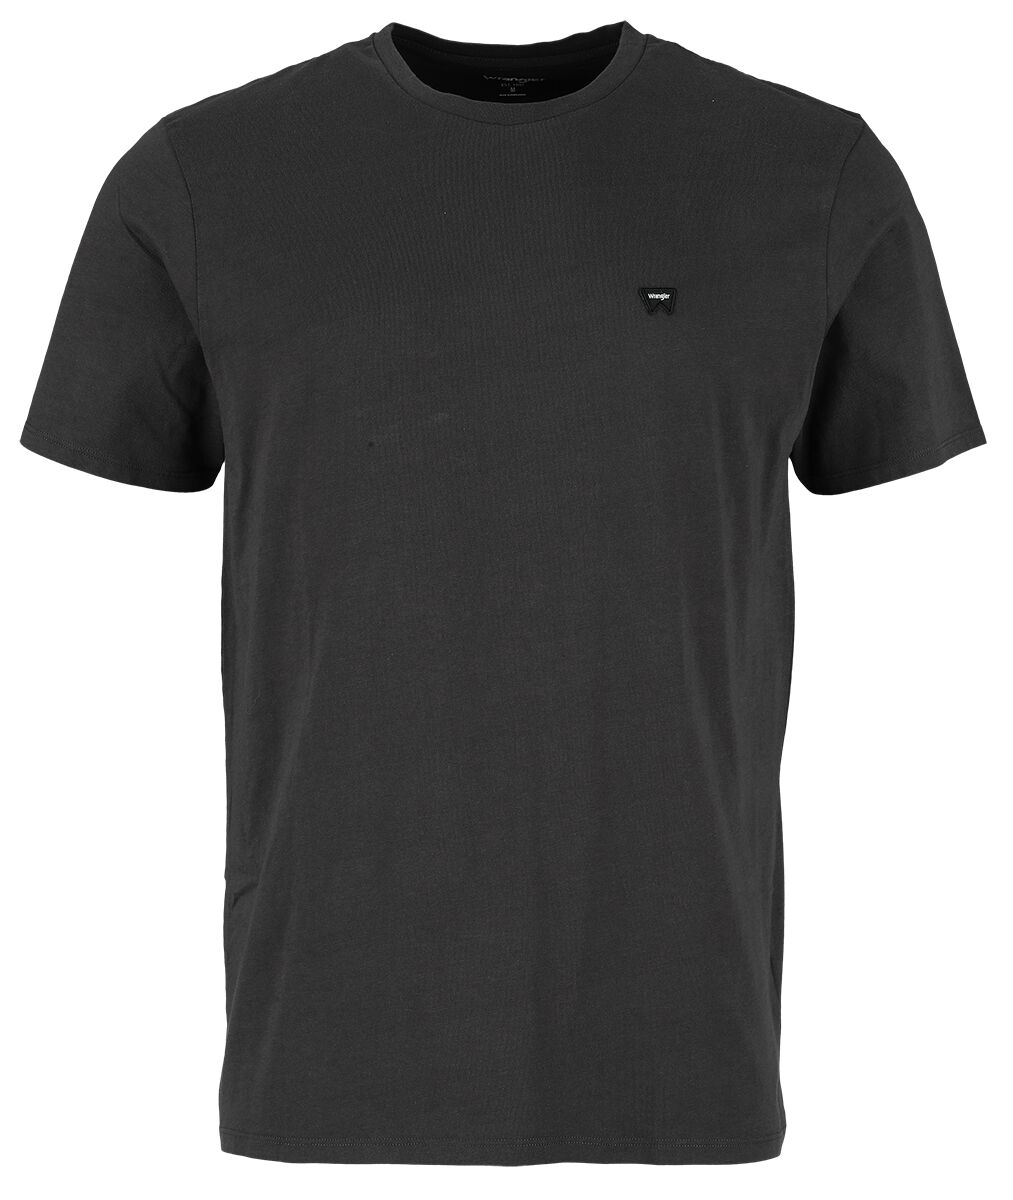 Wrangler Sign Off Tee Faded Black T-Shirt schwarz in S